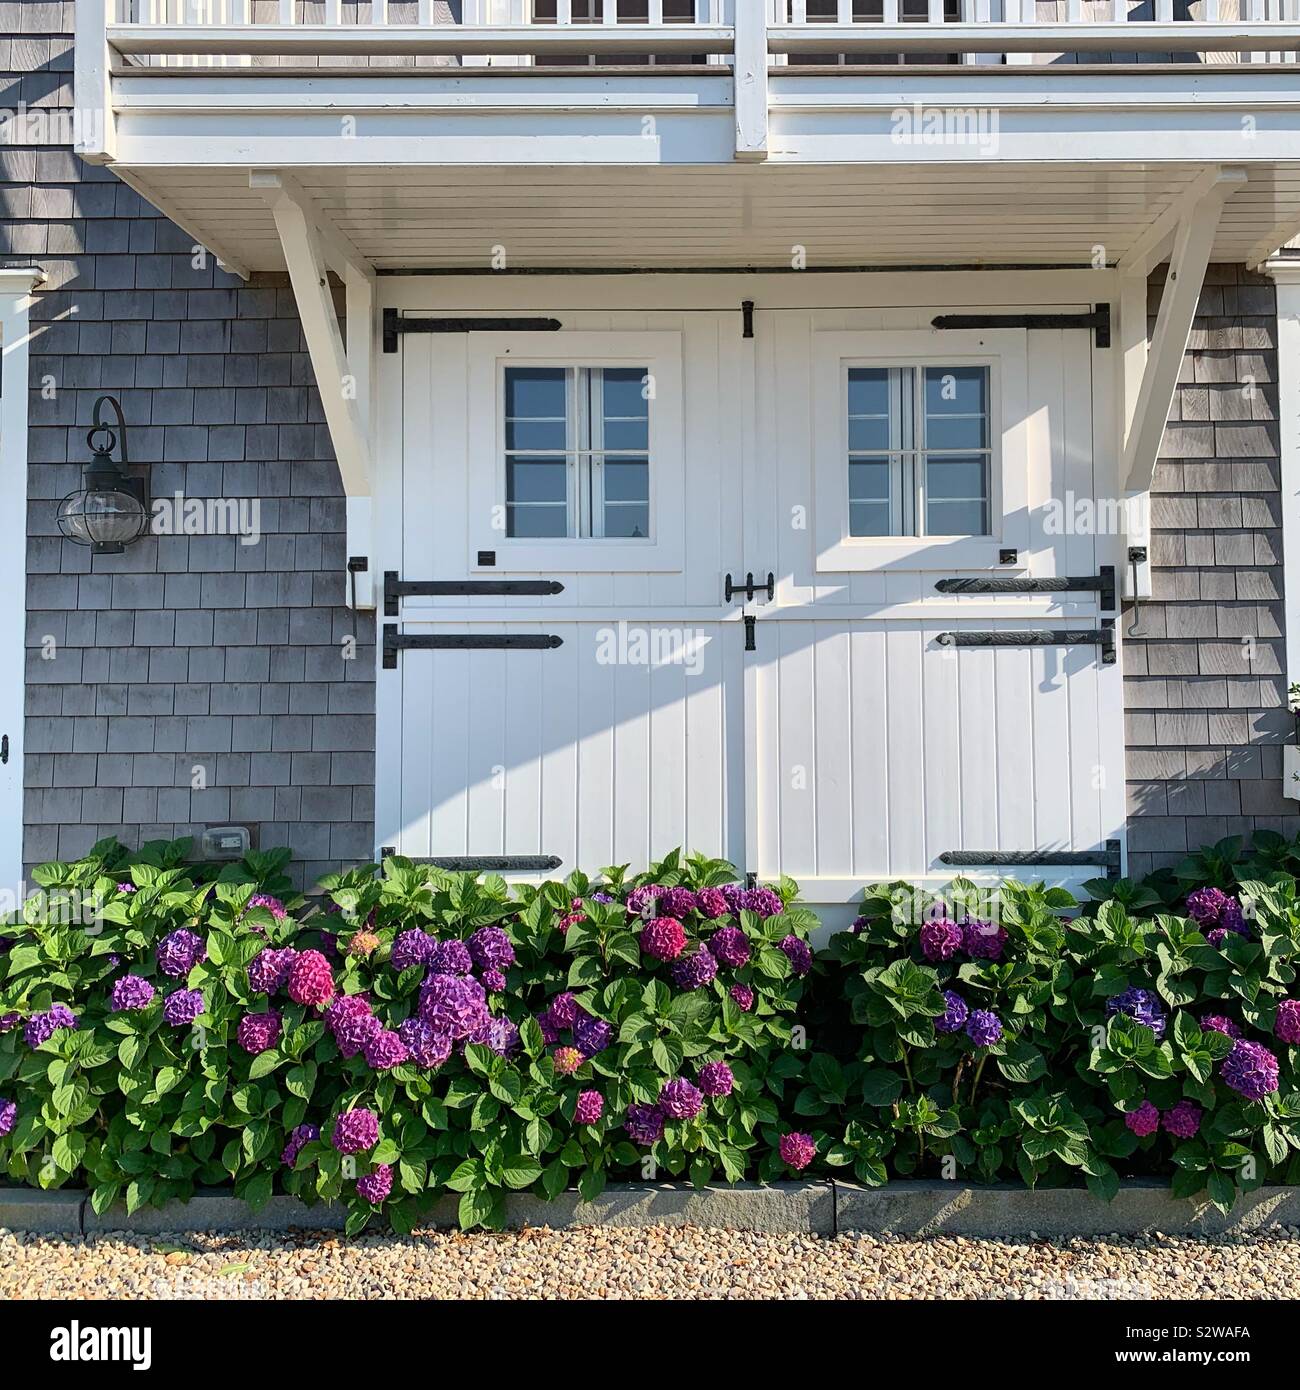 Flowers in front doors on Nantucket, Massachusetts, United States Stock Photo